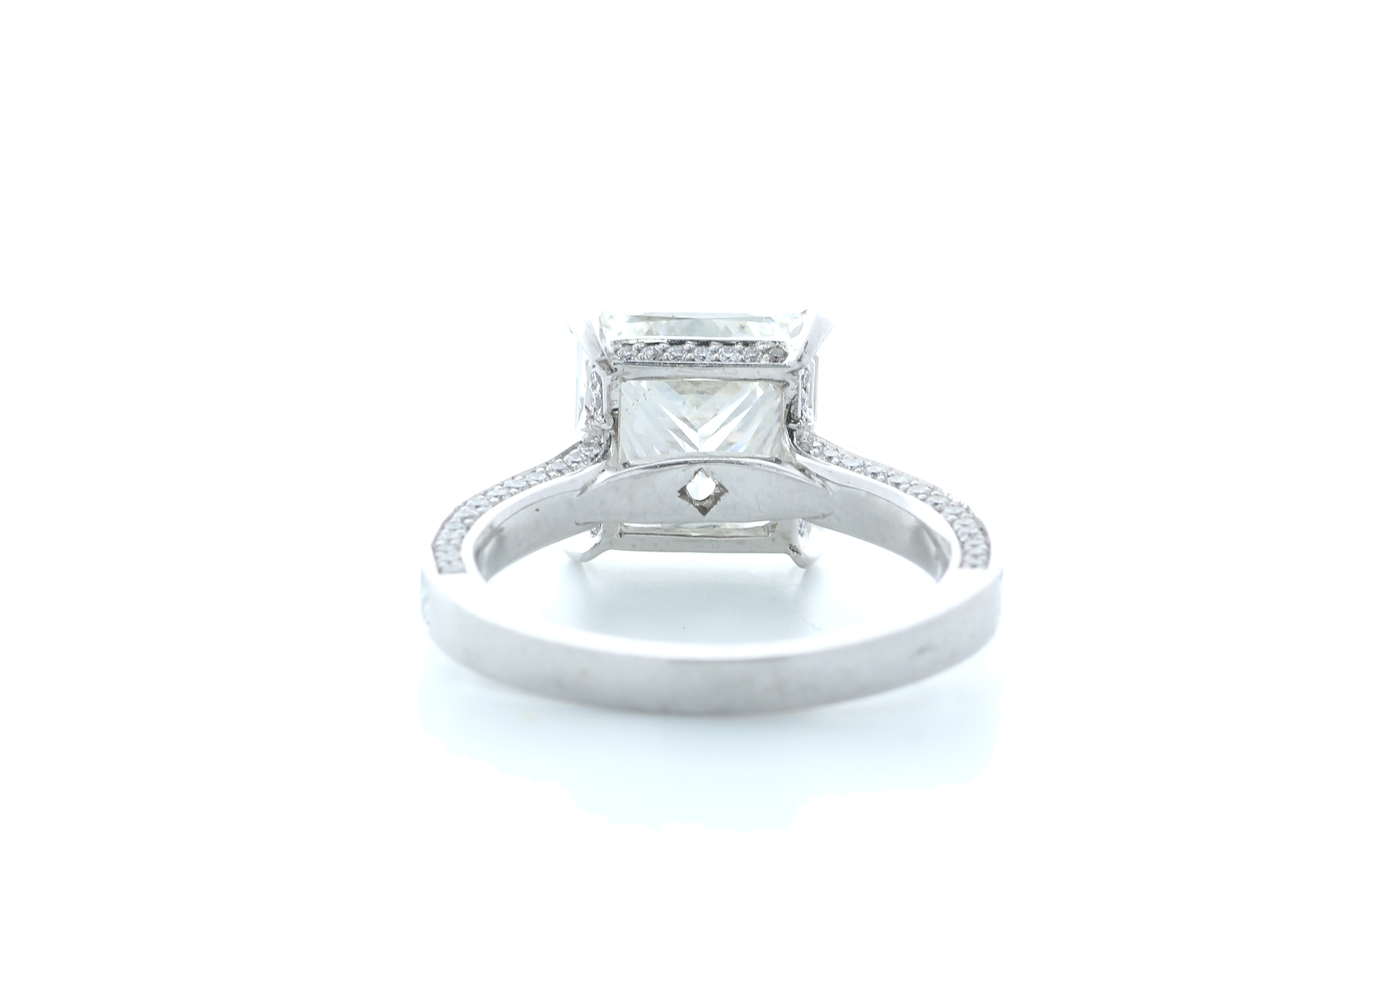 18ct White Gold Princess Cut Diamond Ring 5.13 (4.33) Carats - Image 3 of 5